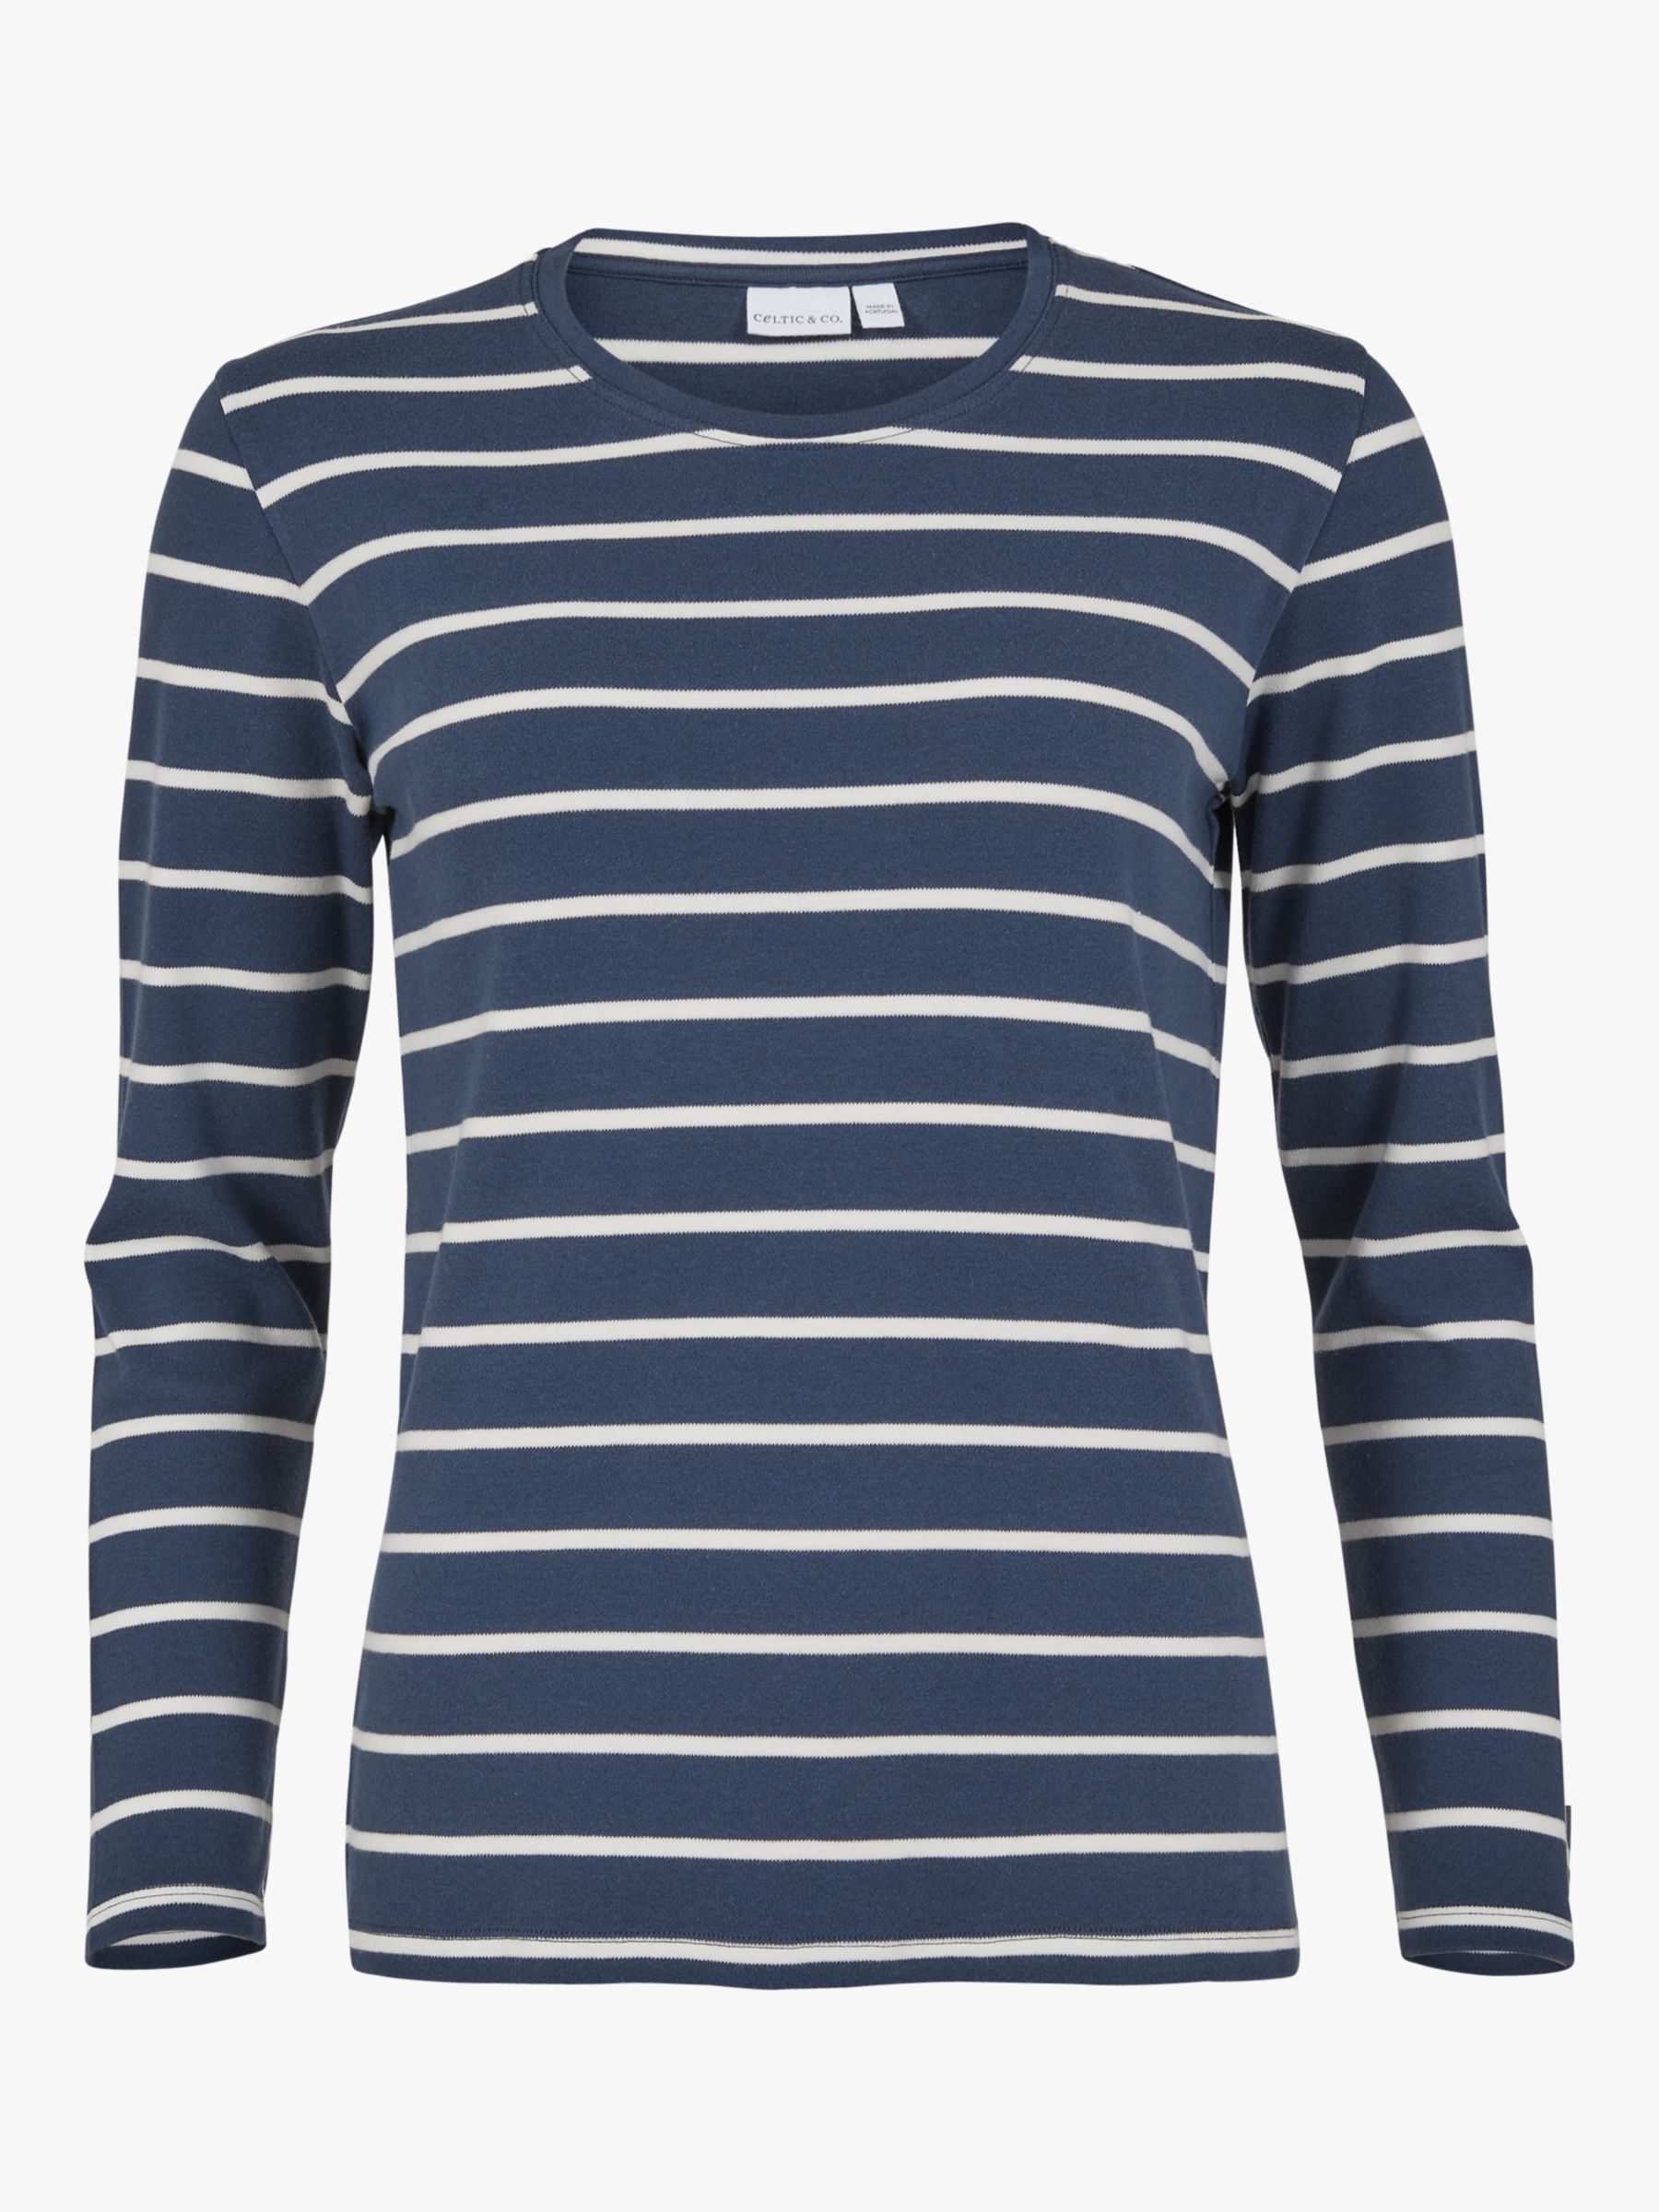 Celtic & Co. Stripe Long Sleeve T-Shirt, Navy/Chalk at John Lewis ...